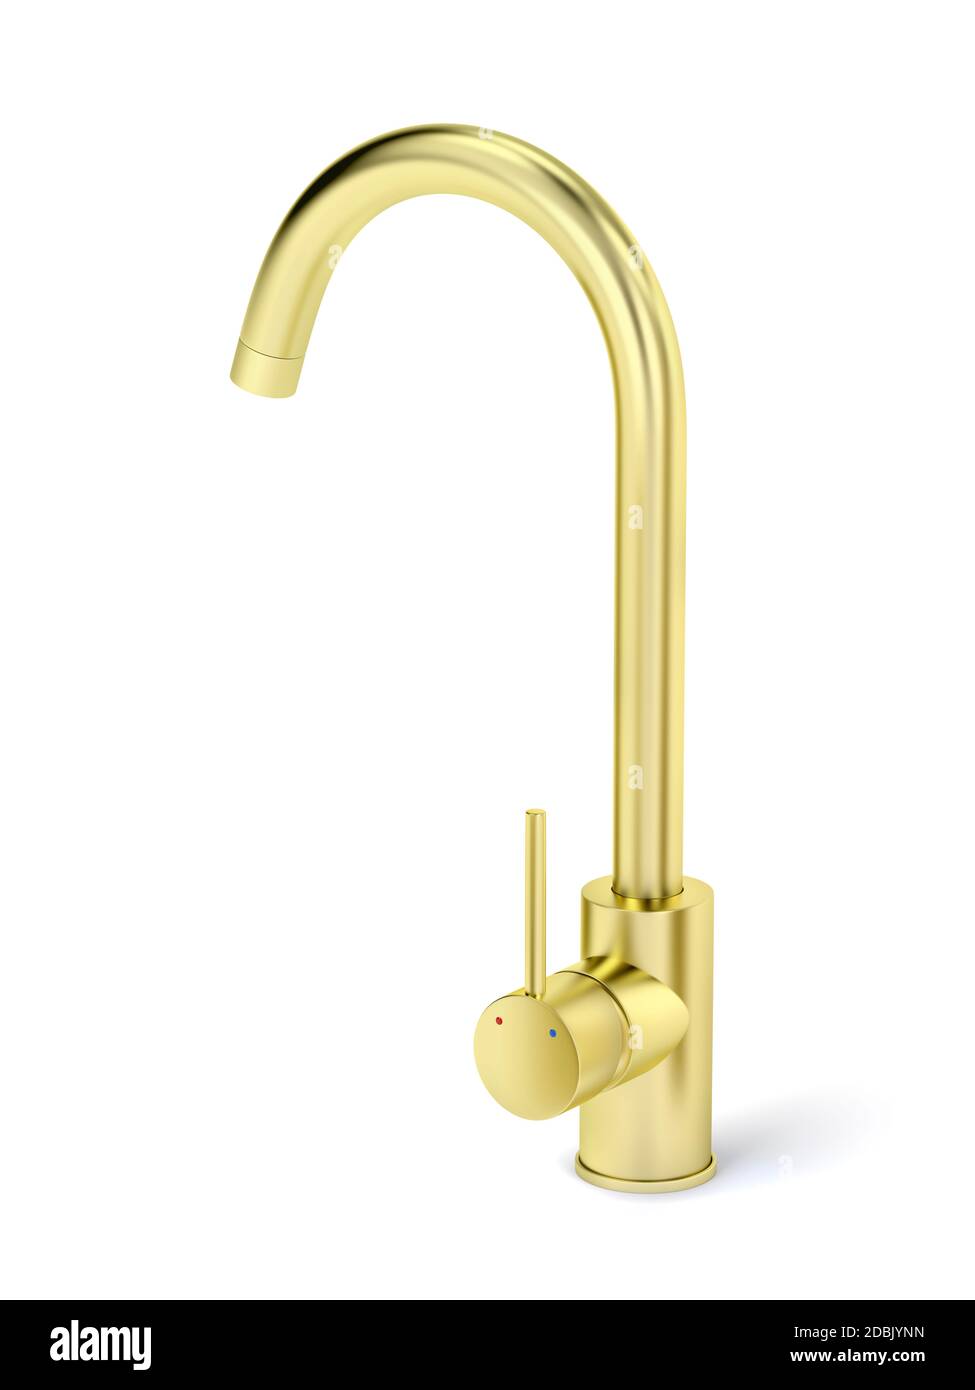 Golden kitchen faucet on white background Stock Photo - Alamy